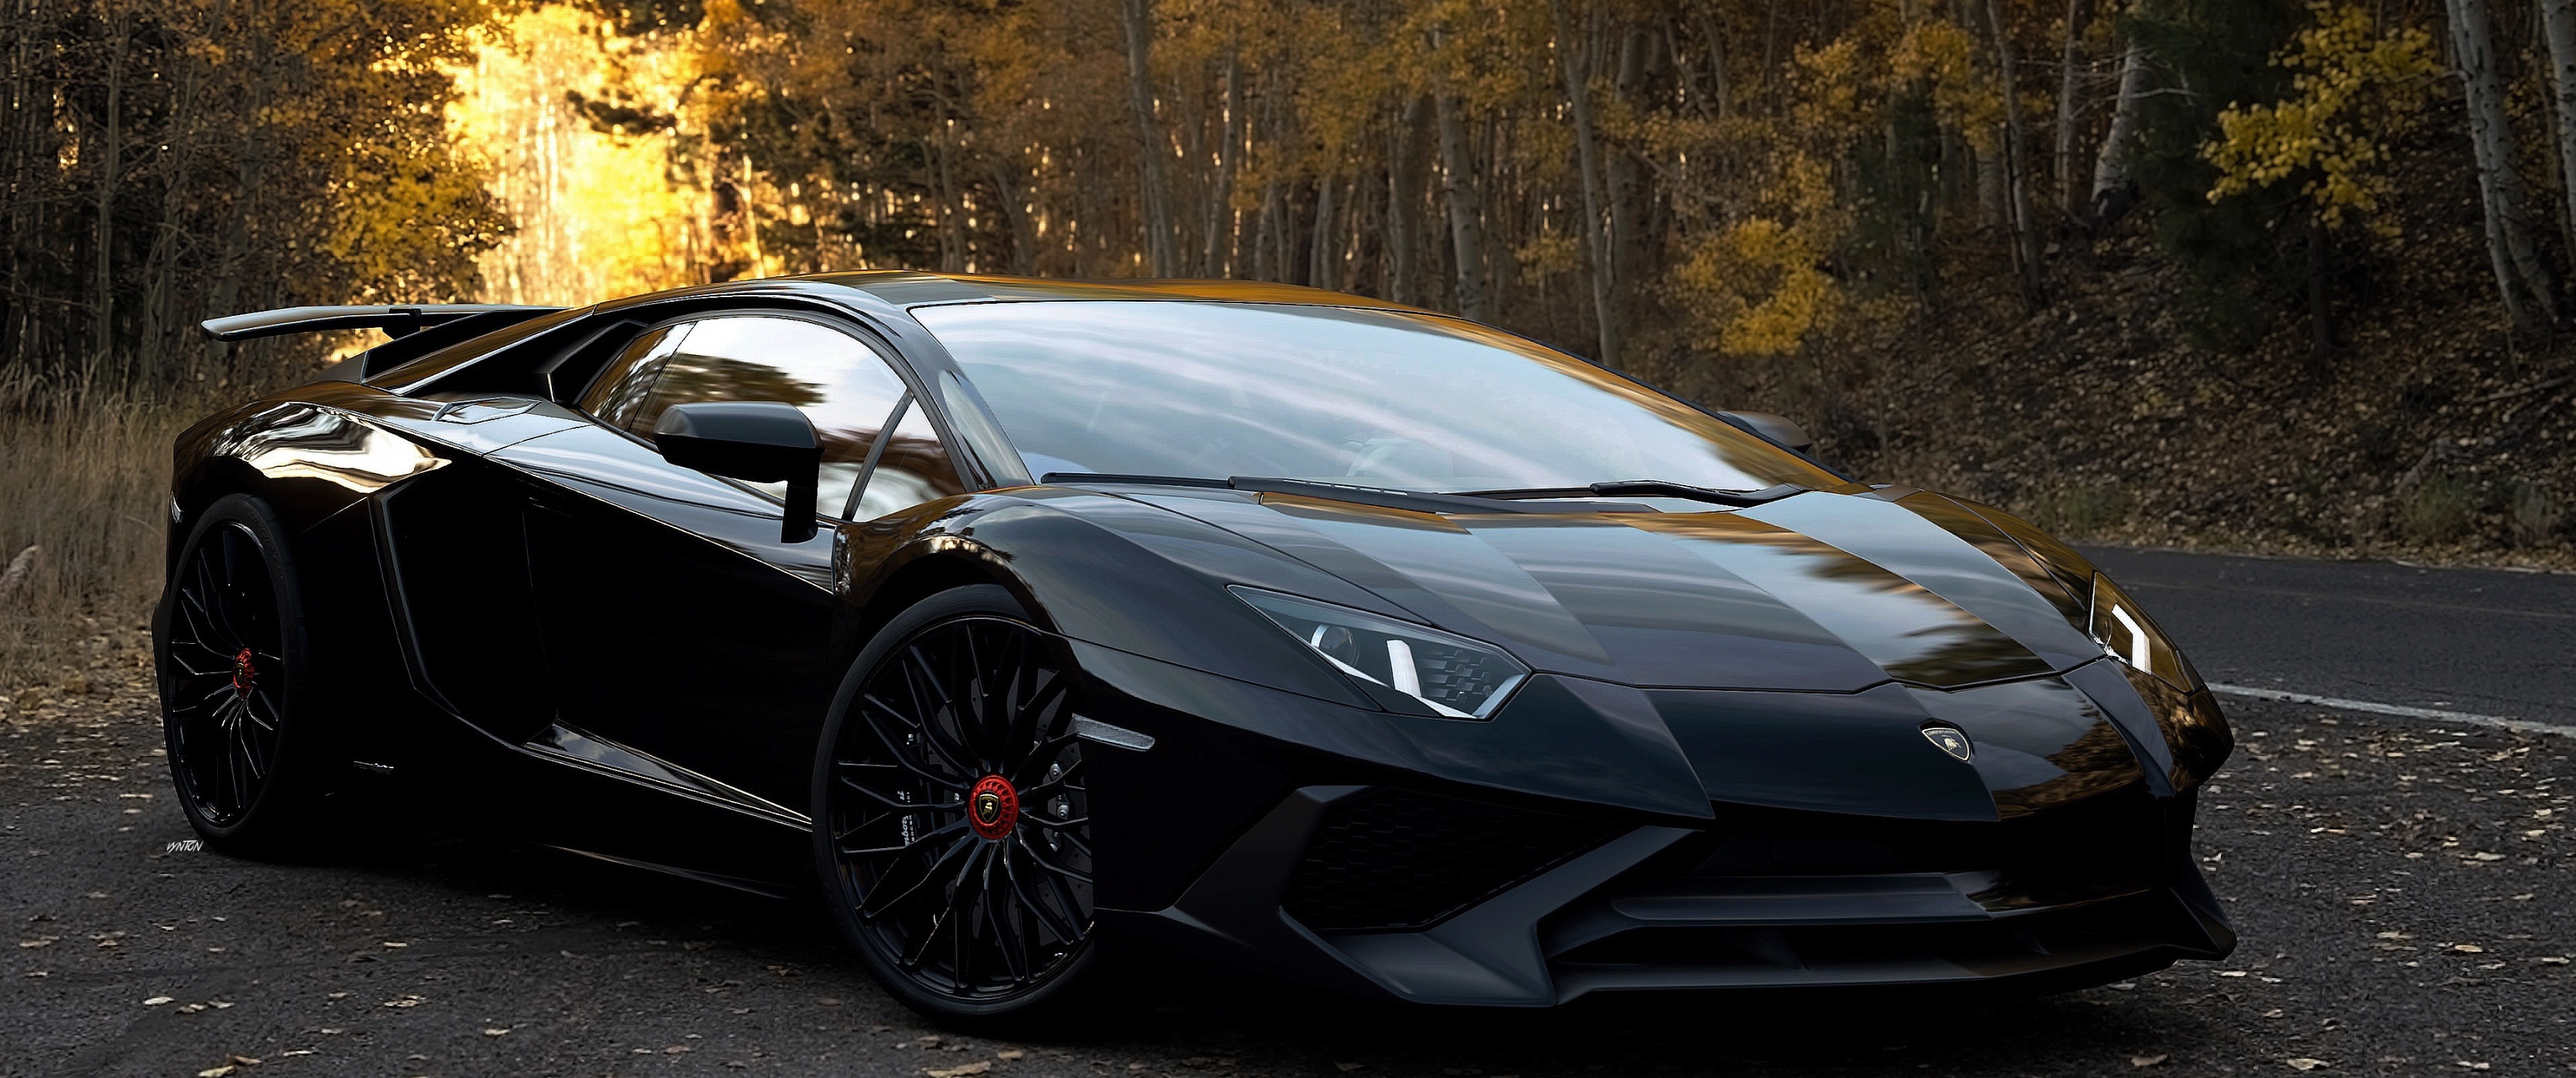 Lamborghini Aventador SV wallpaper, 4K resolution, Black car, Darth Vader inspiration, 3440x1440 Dual Screen Desktop